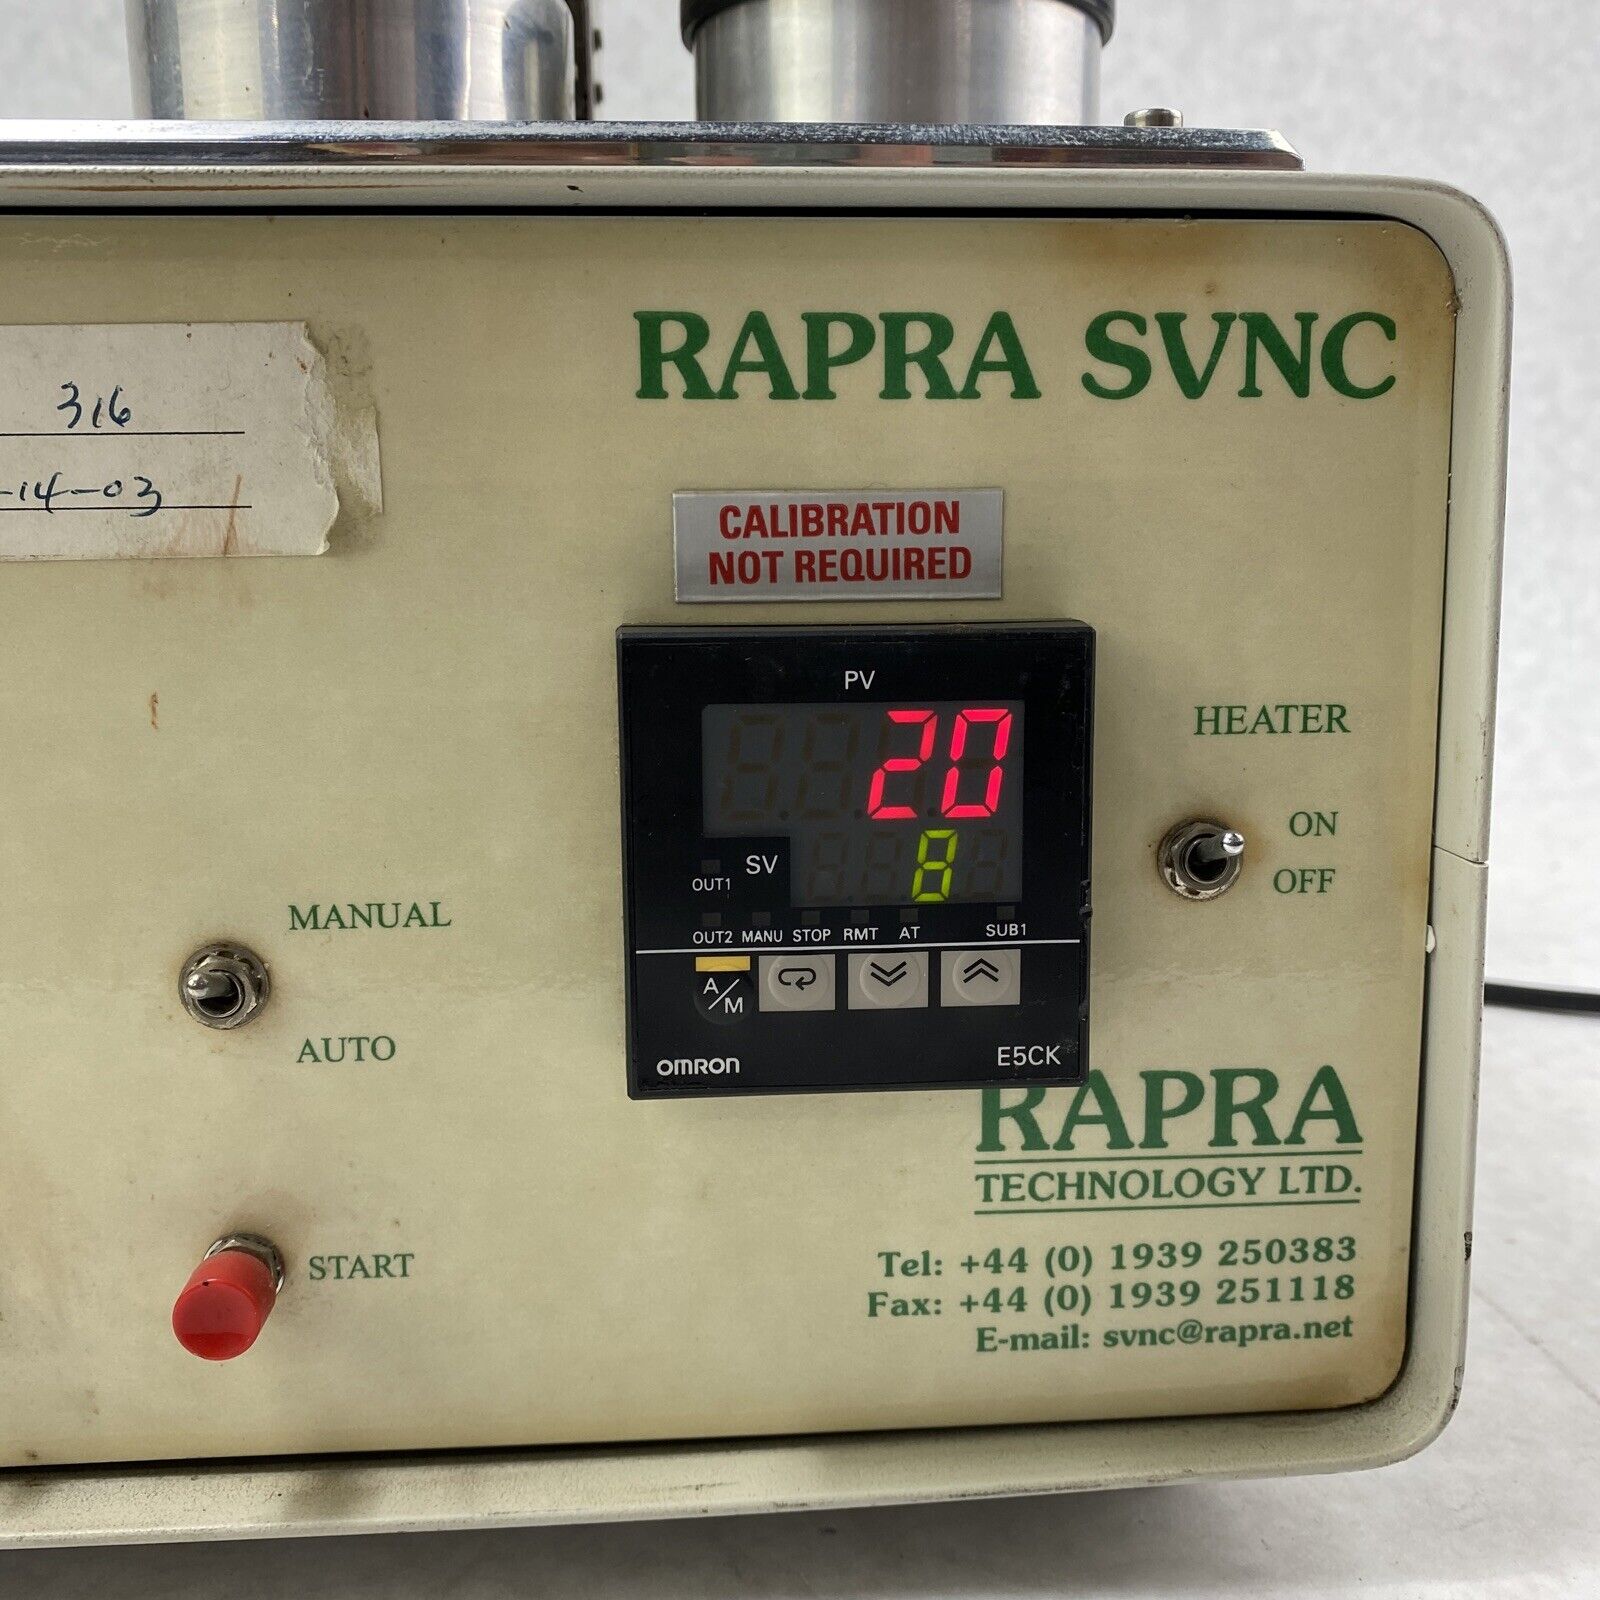 Rapra SVNC Scanning Vibrating Needle Curemeter FOR PARTS or REPAIR